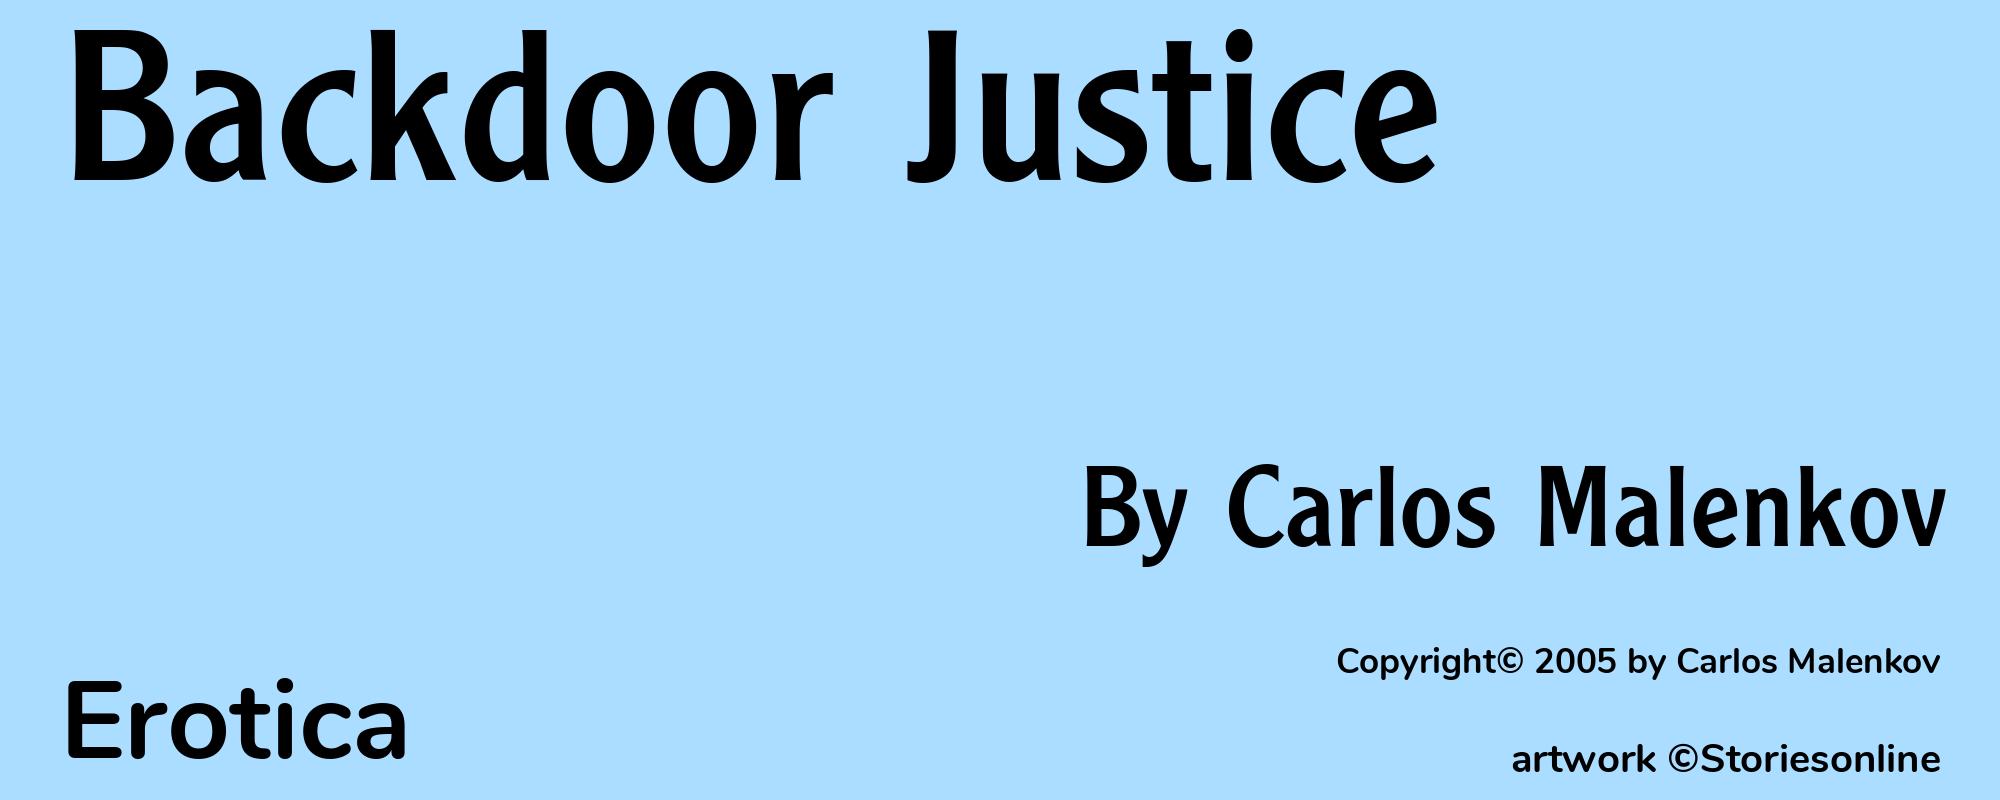 Backdoor Justice - Cover